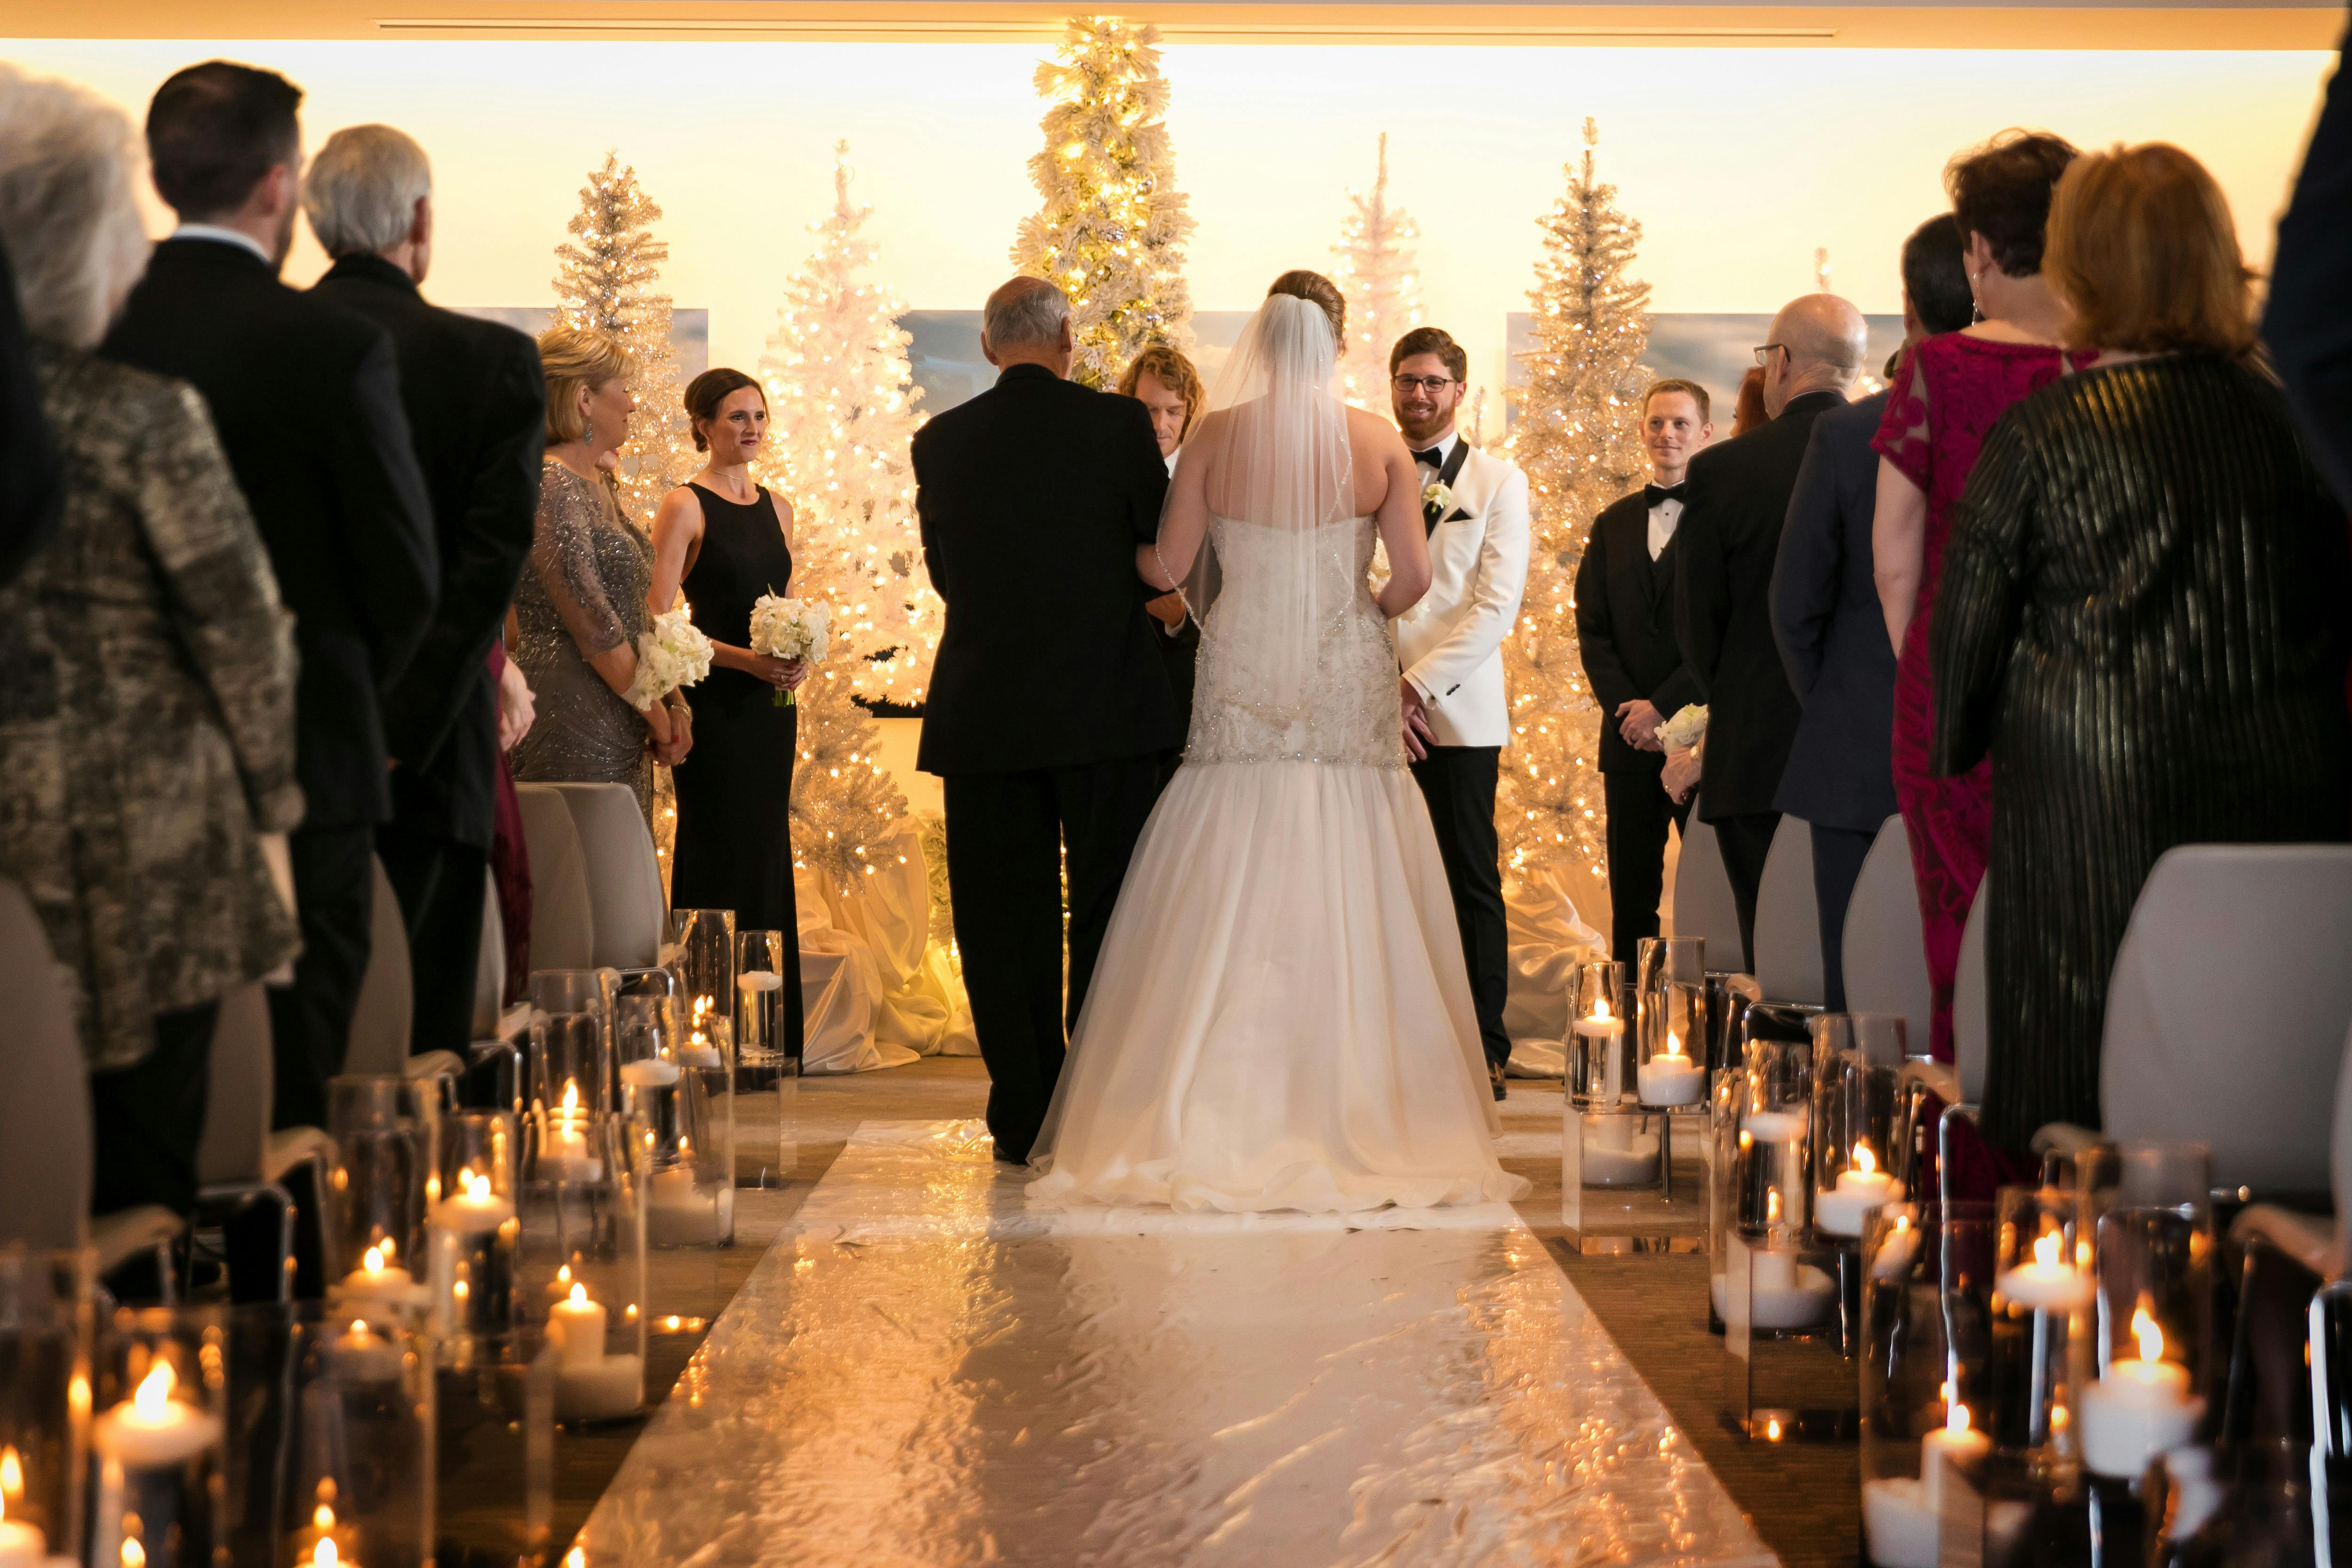 Winter wedding with silver foil wedding aisle décor | PartySlate